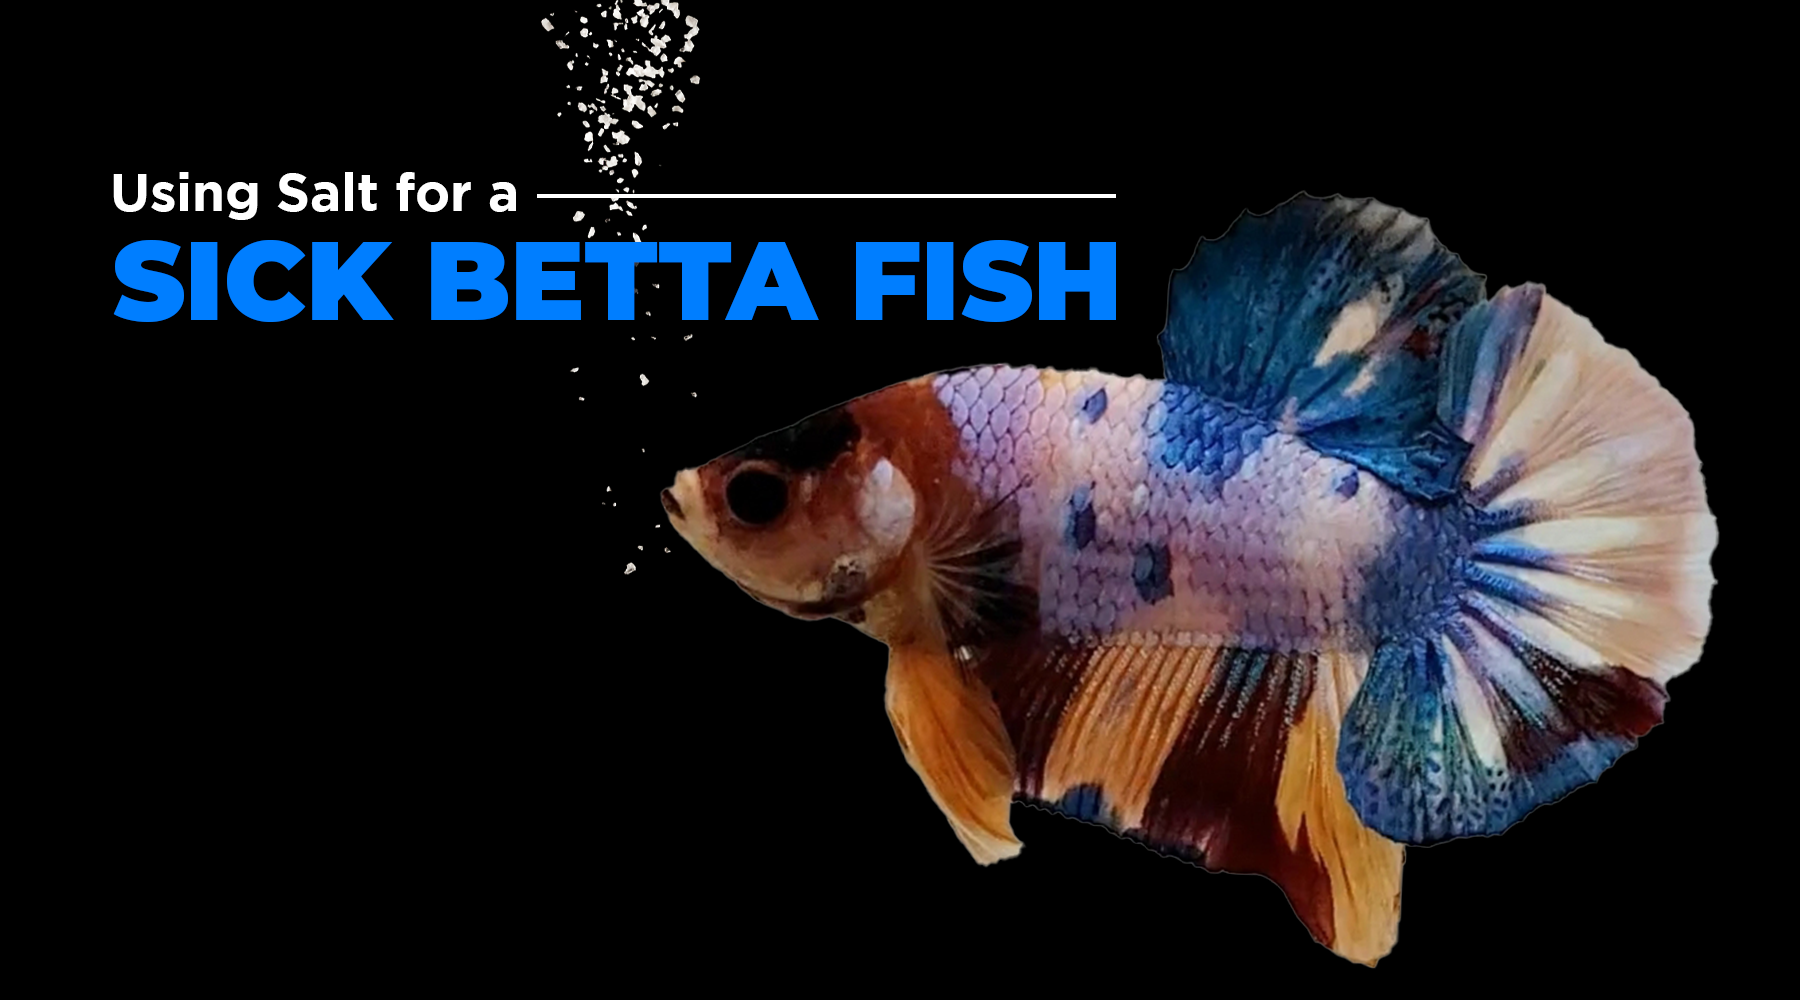 Using Epsom Salt to Treat Sick Betta Fish